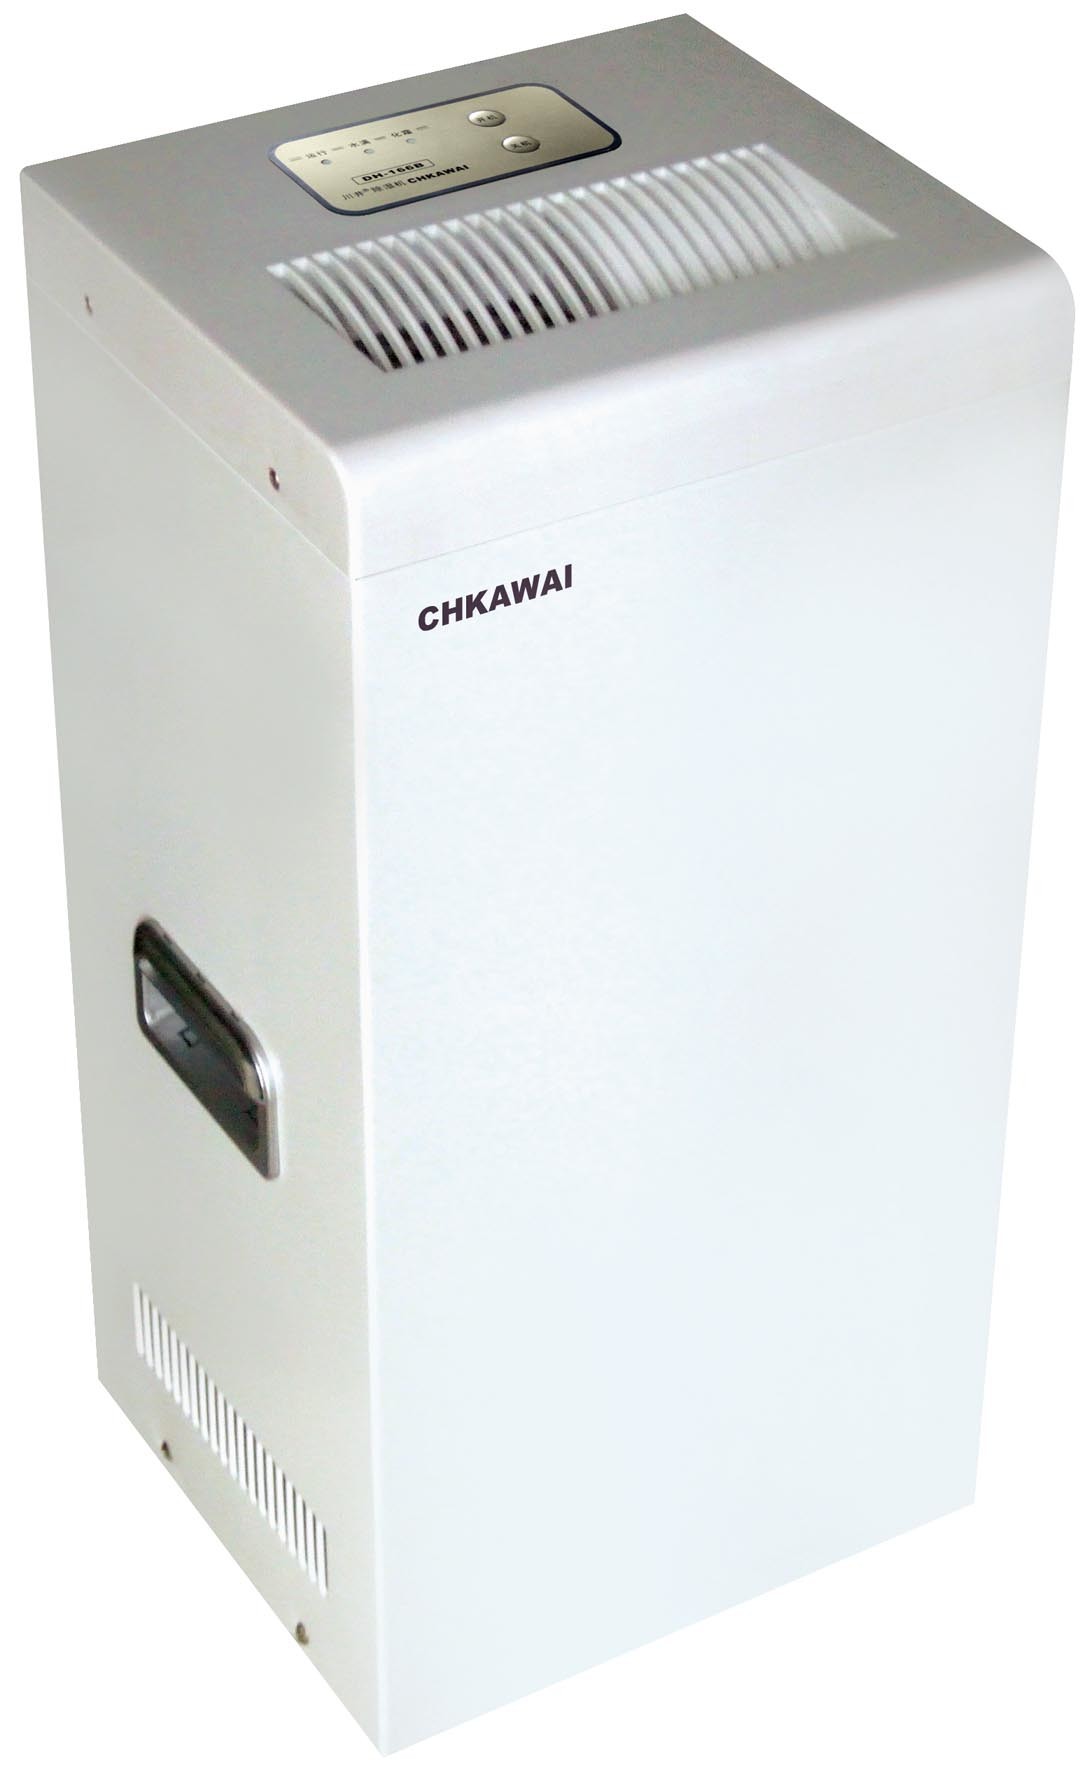 CCC Certified Residential Dehumidifier (DH-166B) 